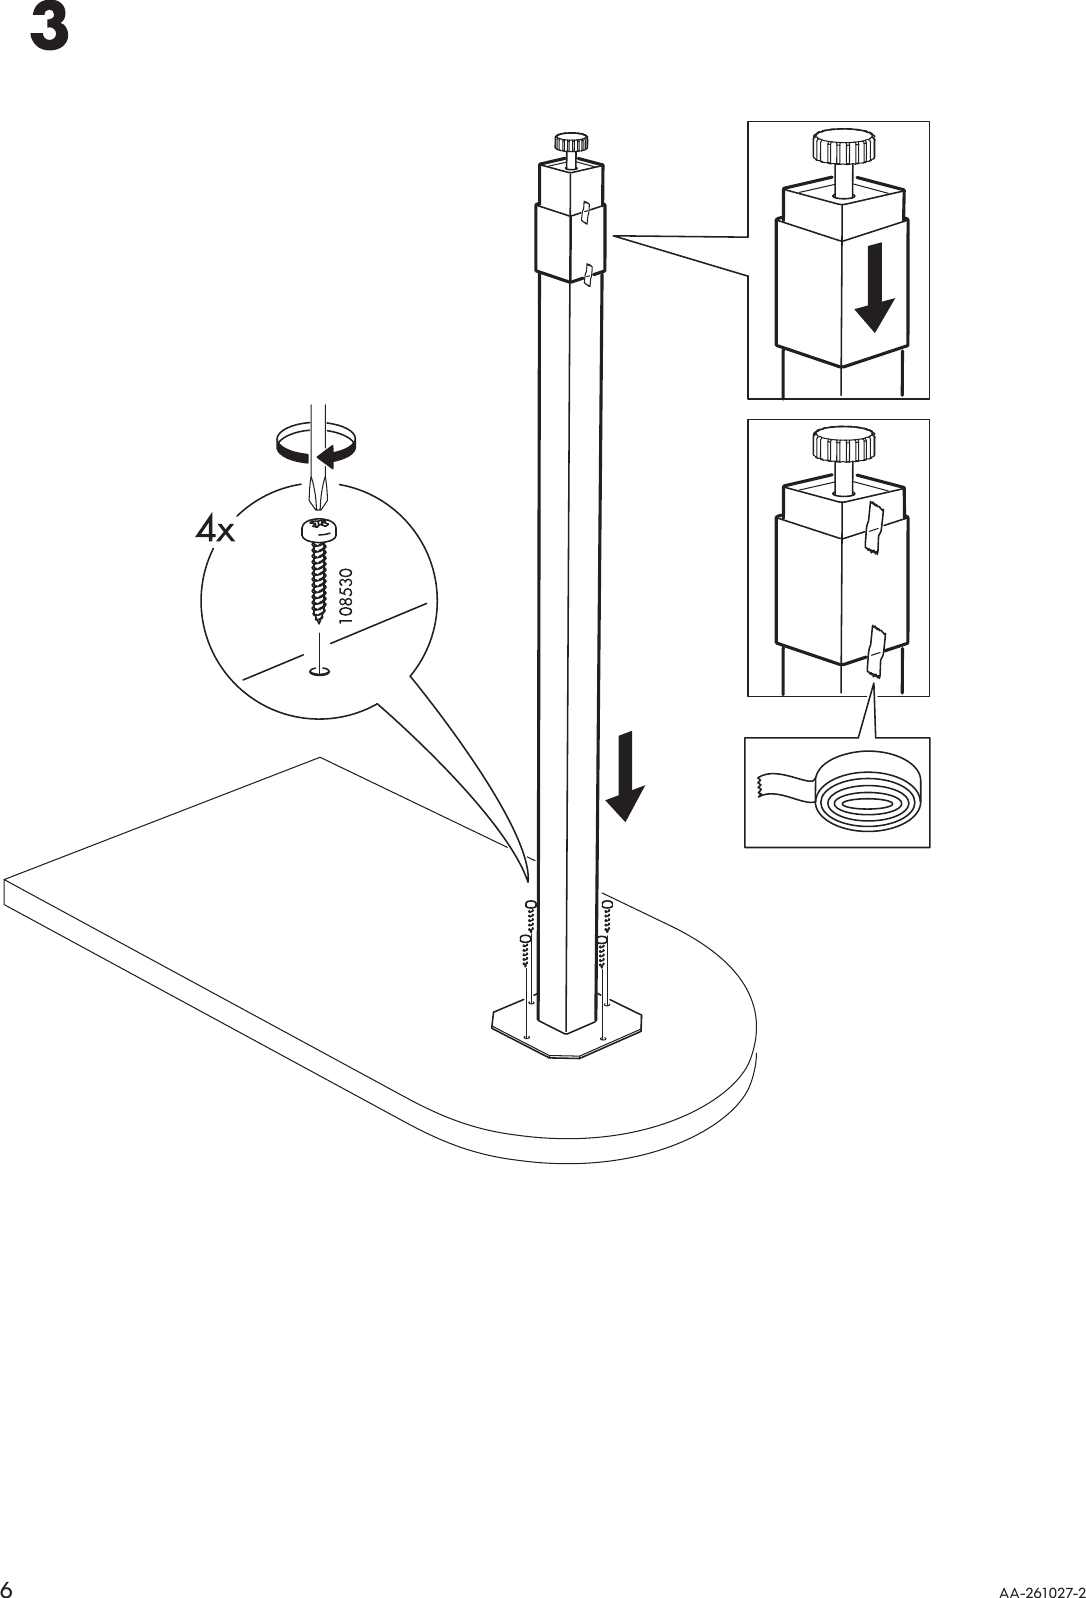 Page 6 of 8 - Ikea Ikea-Utby-Leg-35-3-8-Assembly-Instruction